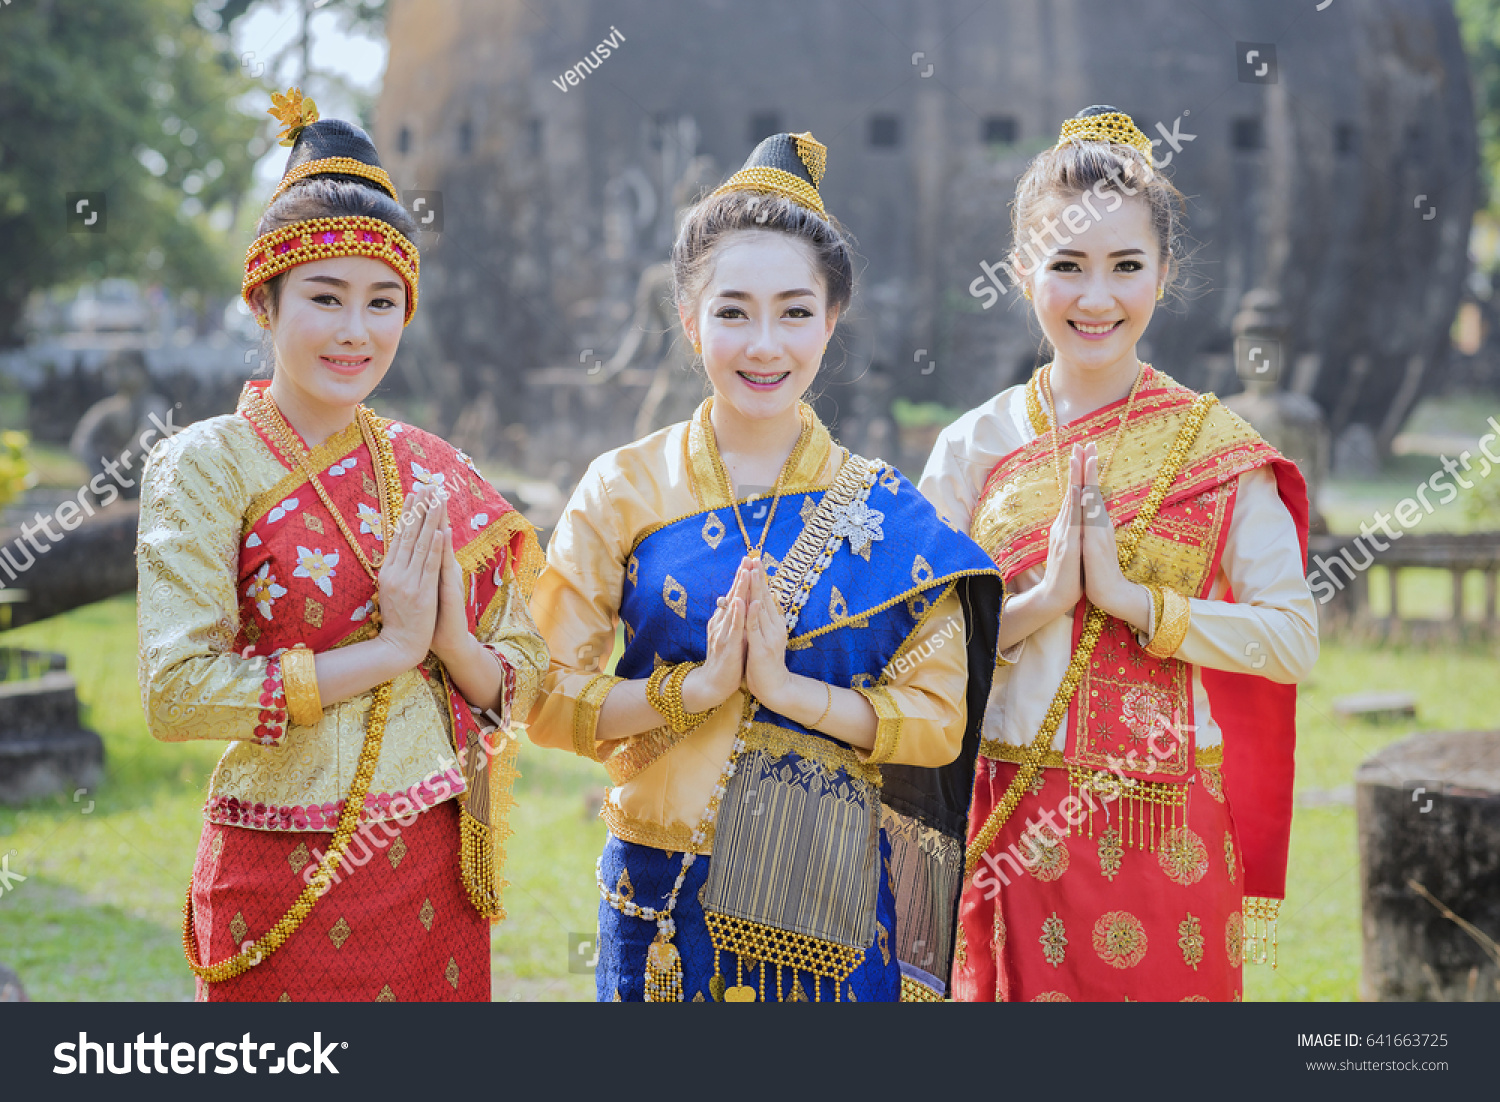 Laos women culture